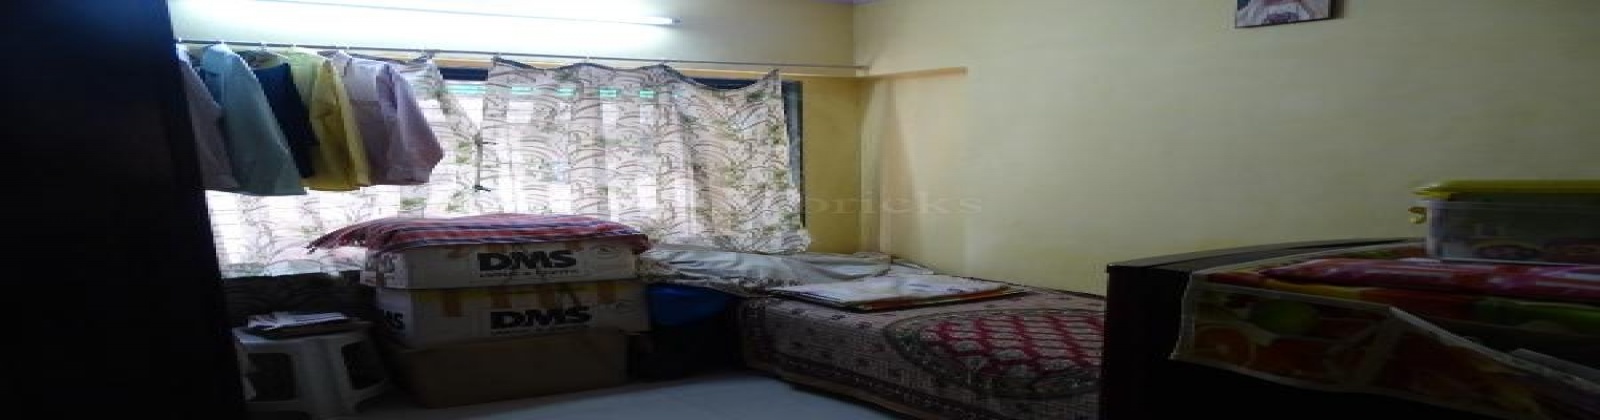 Pant Nagar Gauri Shankar Wadi,Mumbai central Subrub,Maharastra 400075,2 Bedrooms Bedrooms,2 BathroomsBathrooms,Apartment,Neelyog appartments,Gauri Shankar Wadi,1088